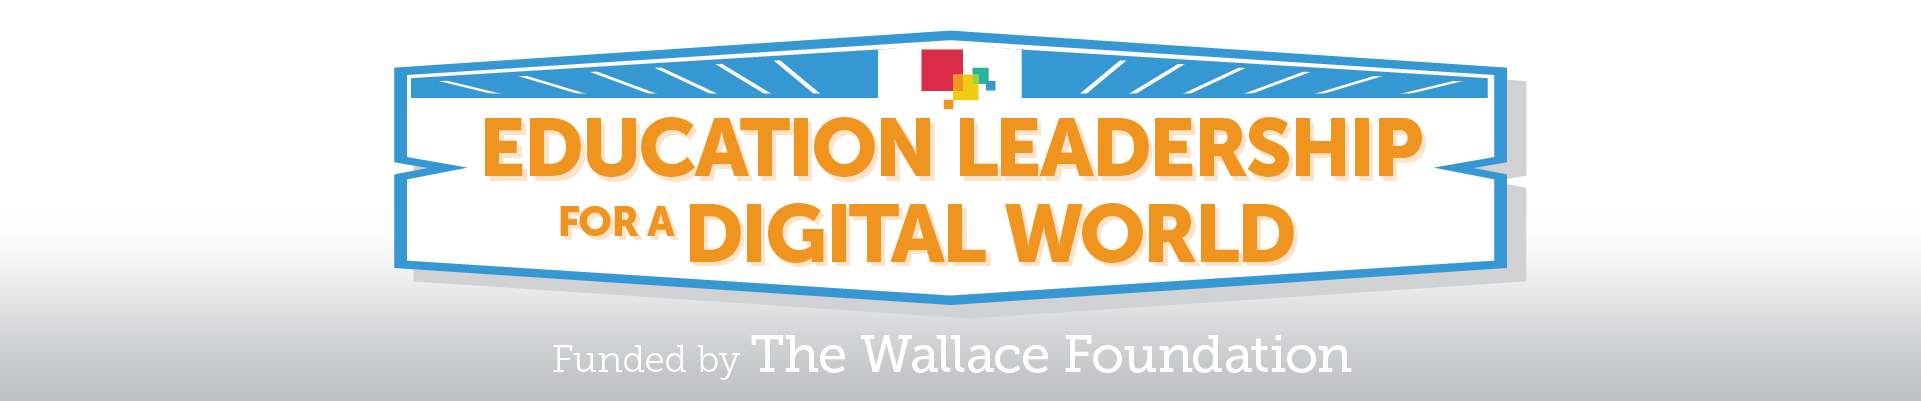 Education Leadership for a Digital World